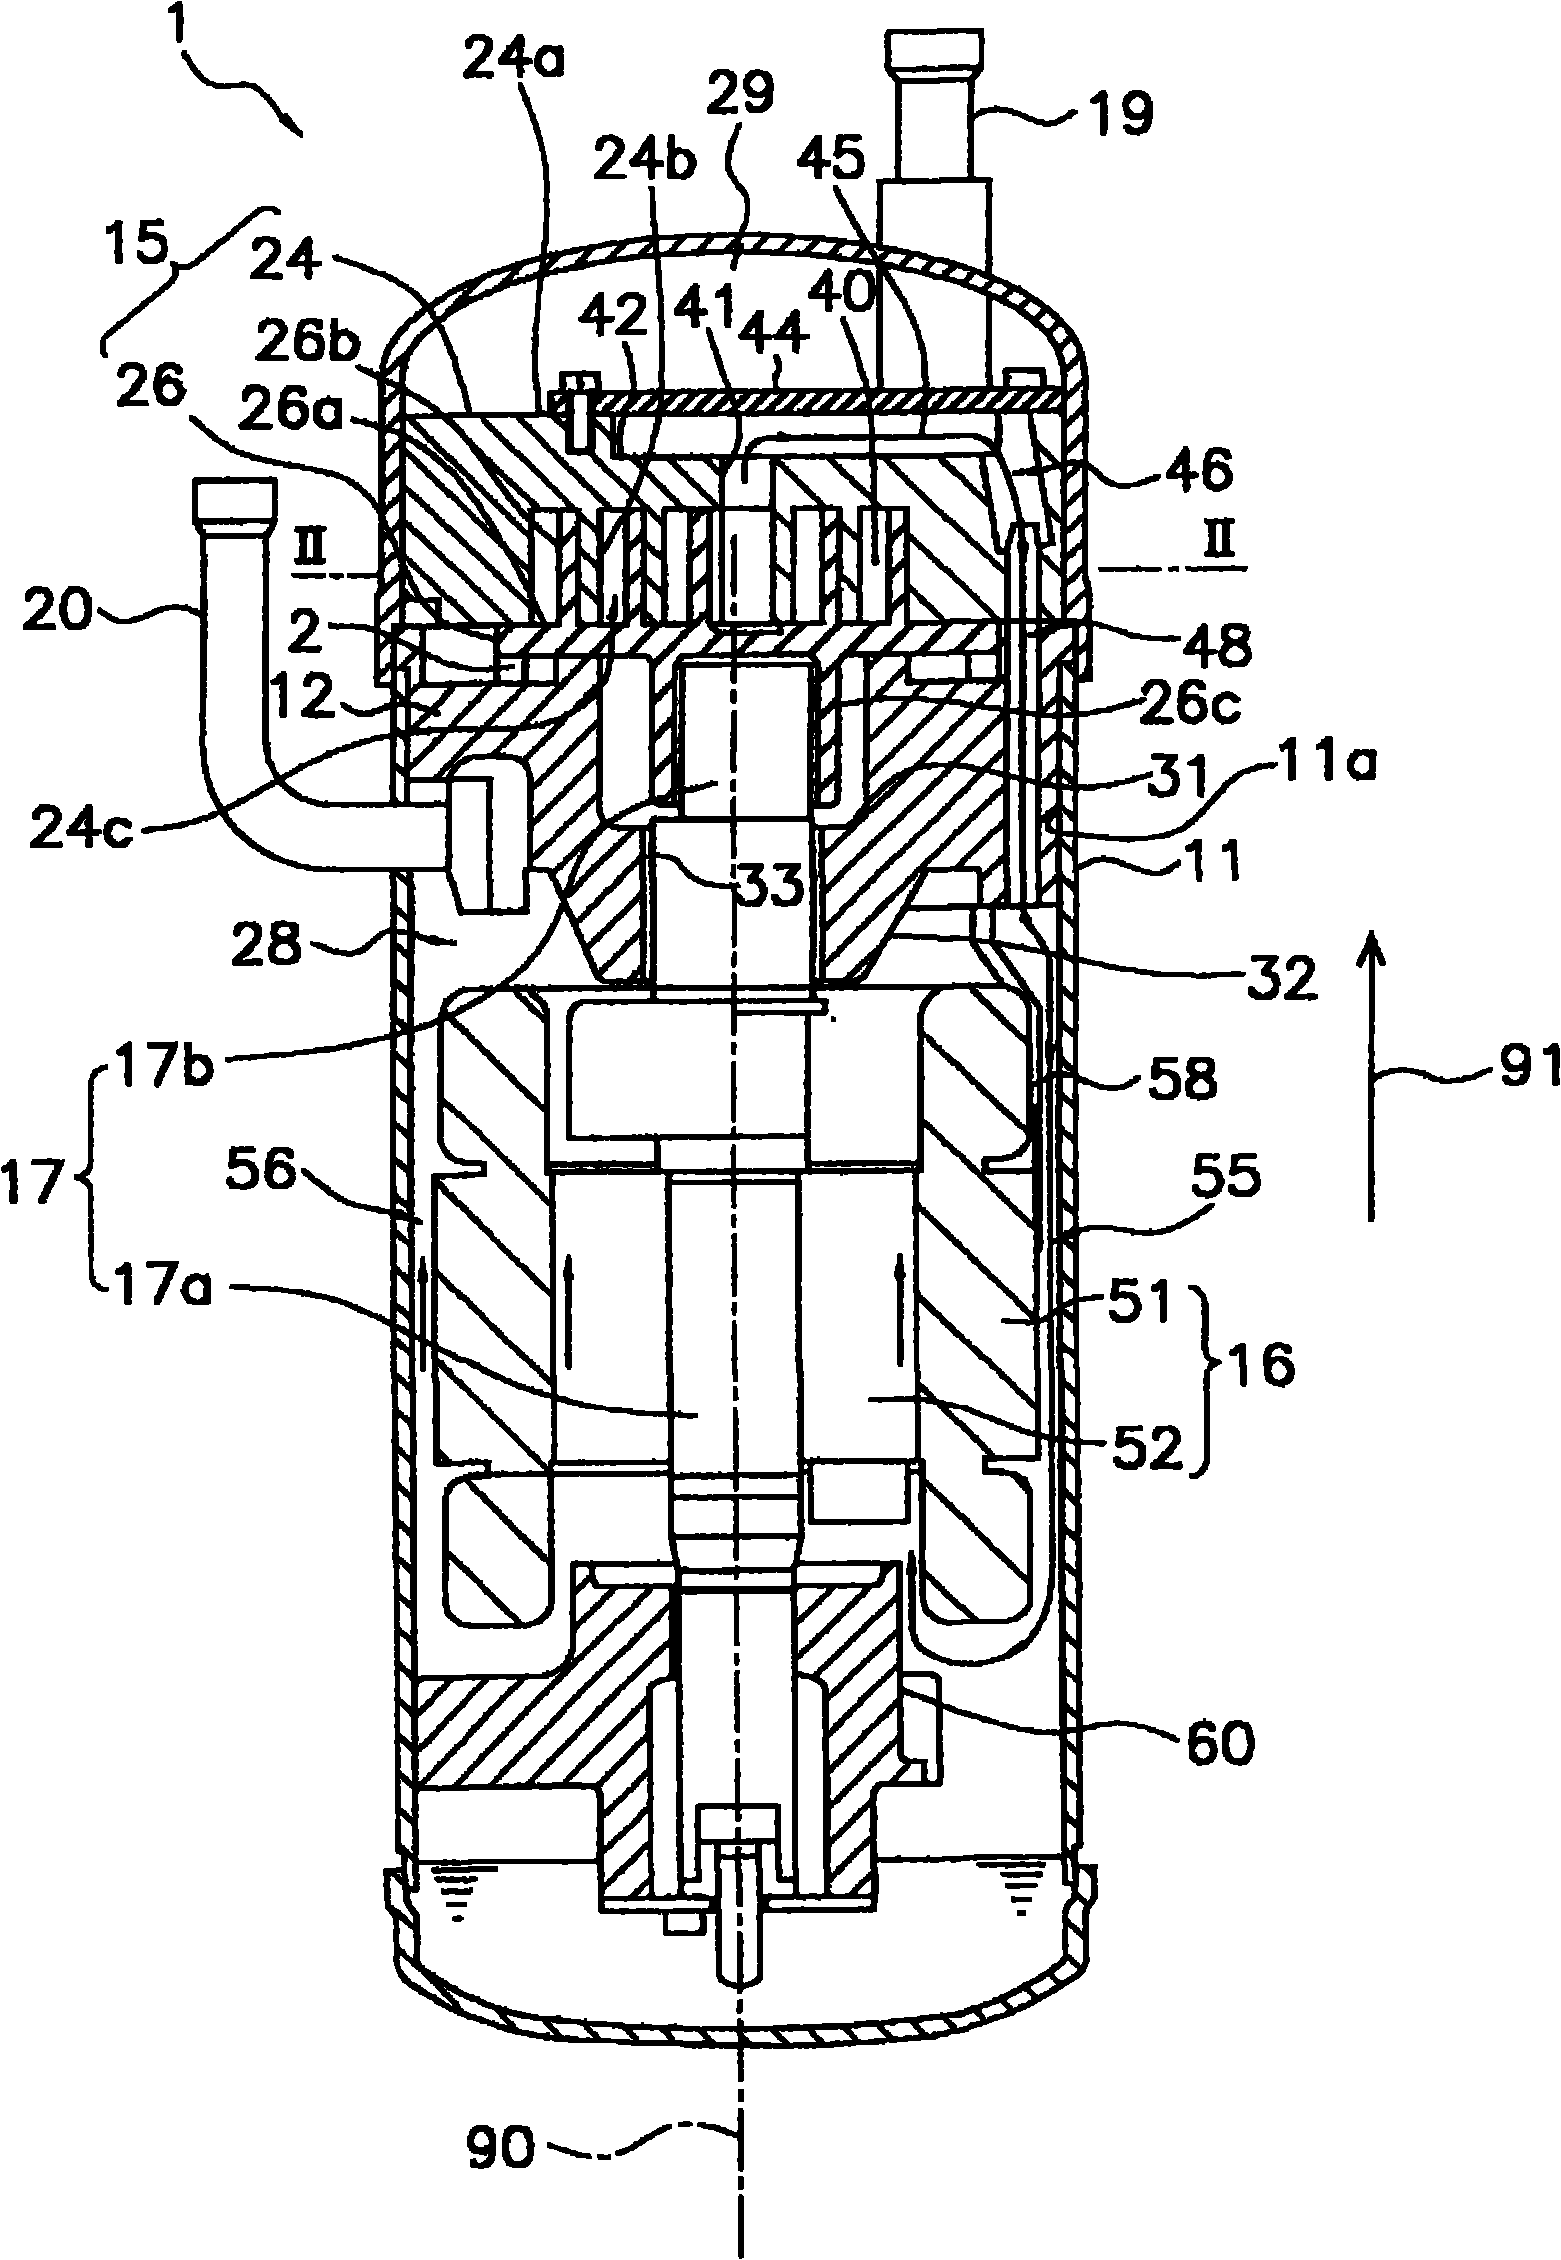 Compression mechanism and scroll compressor